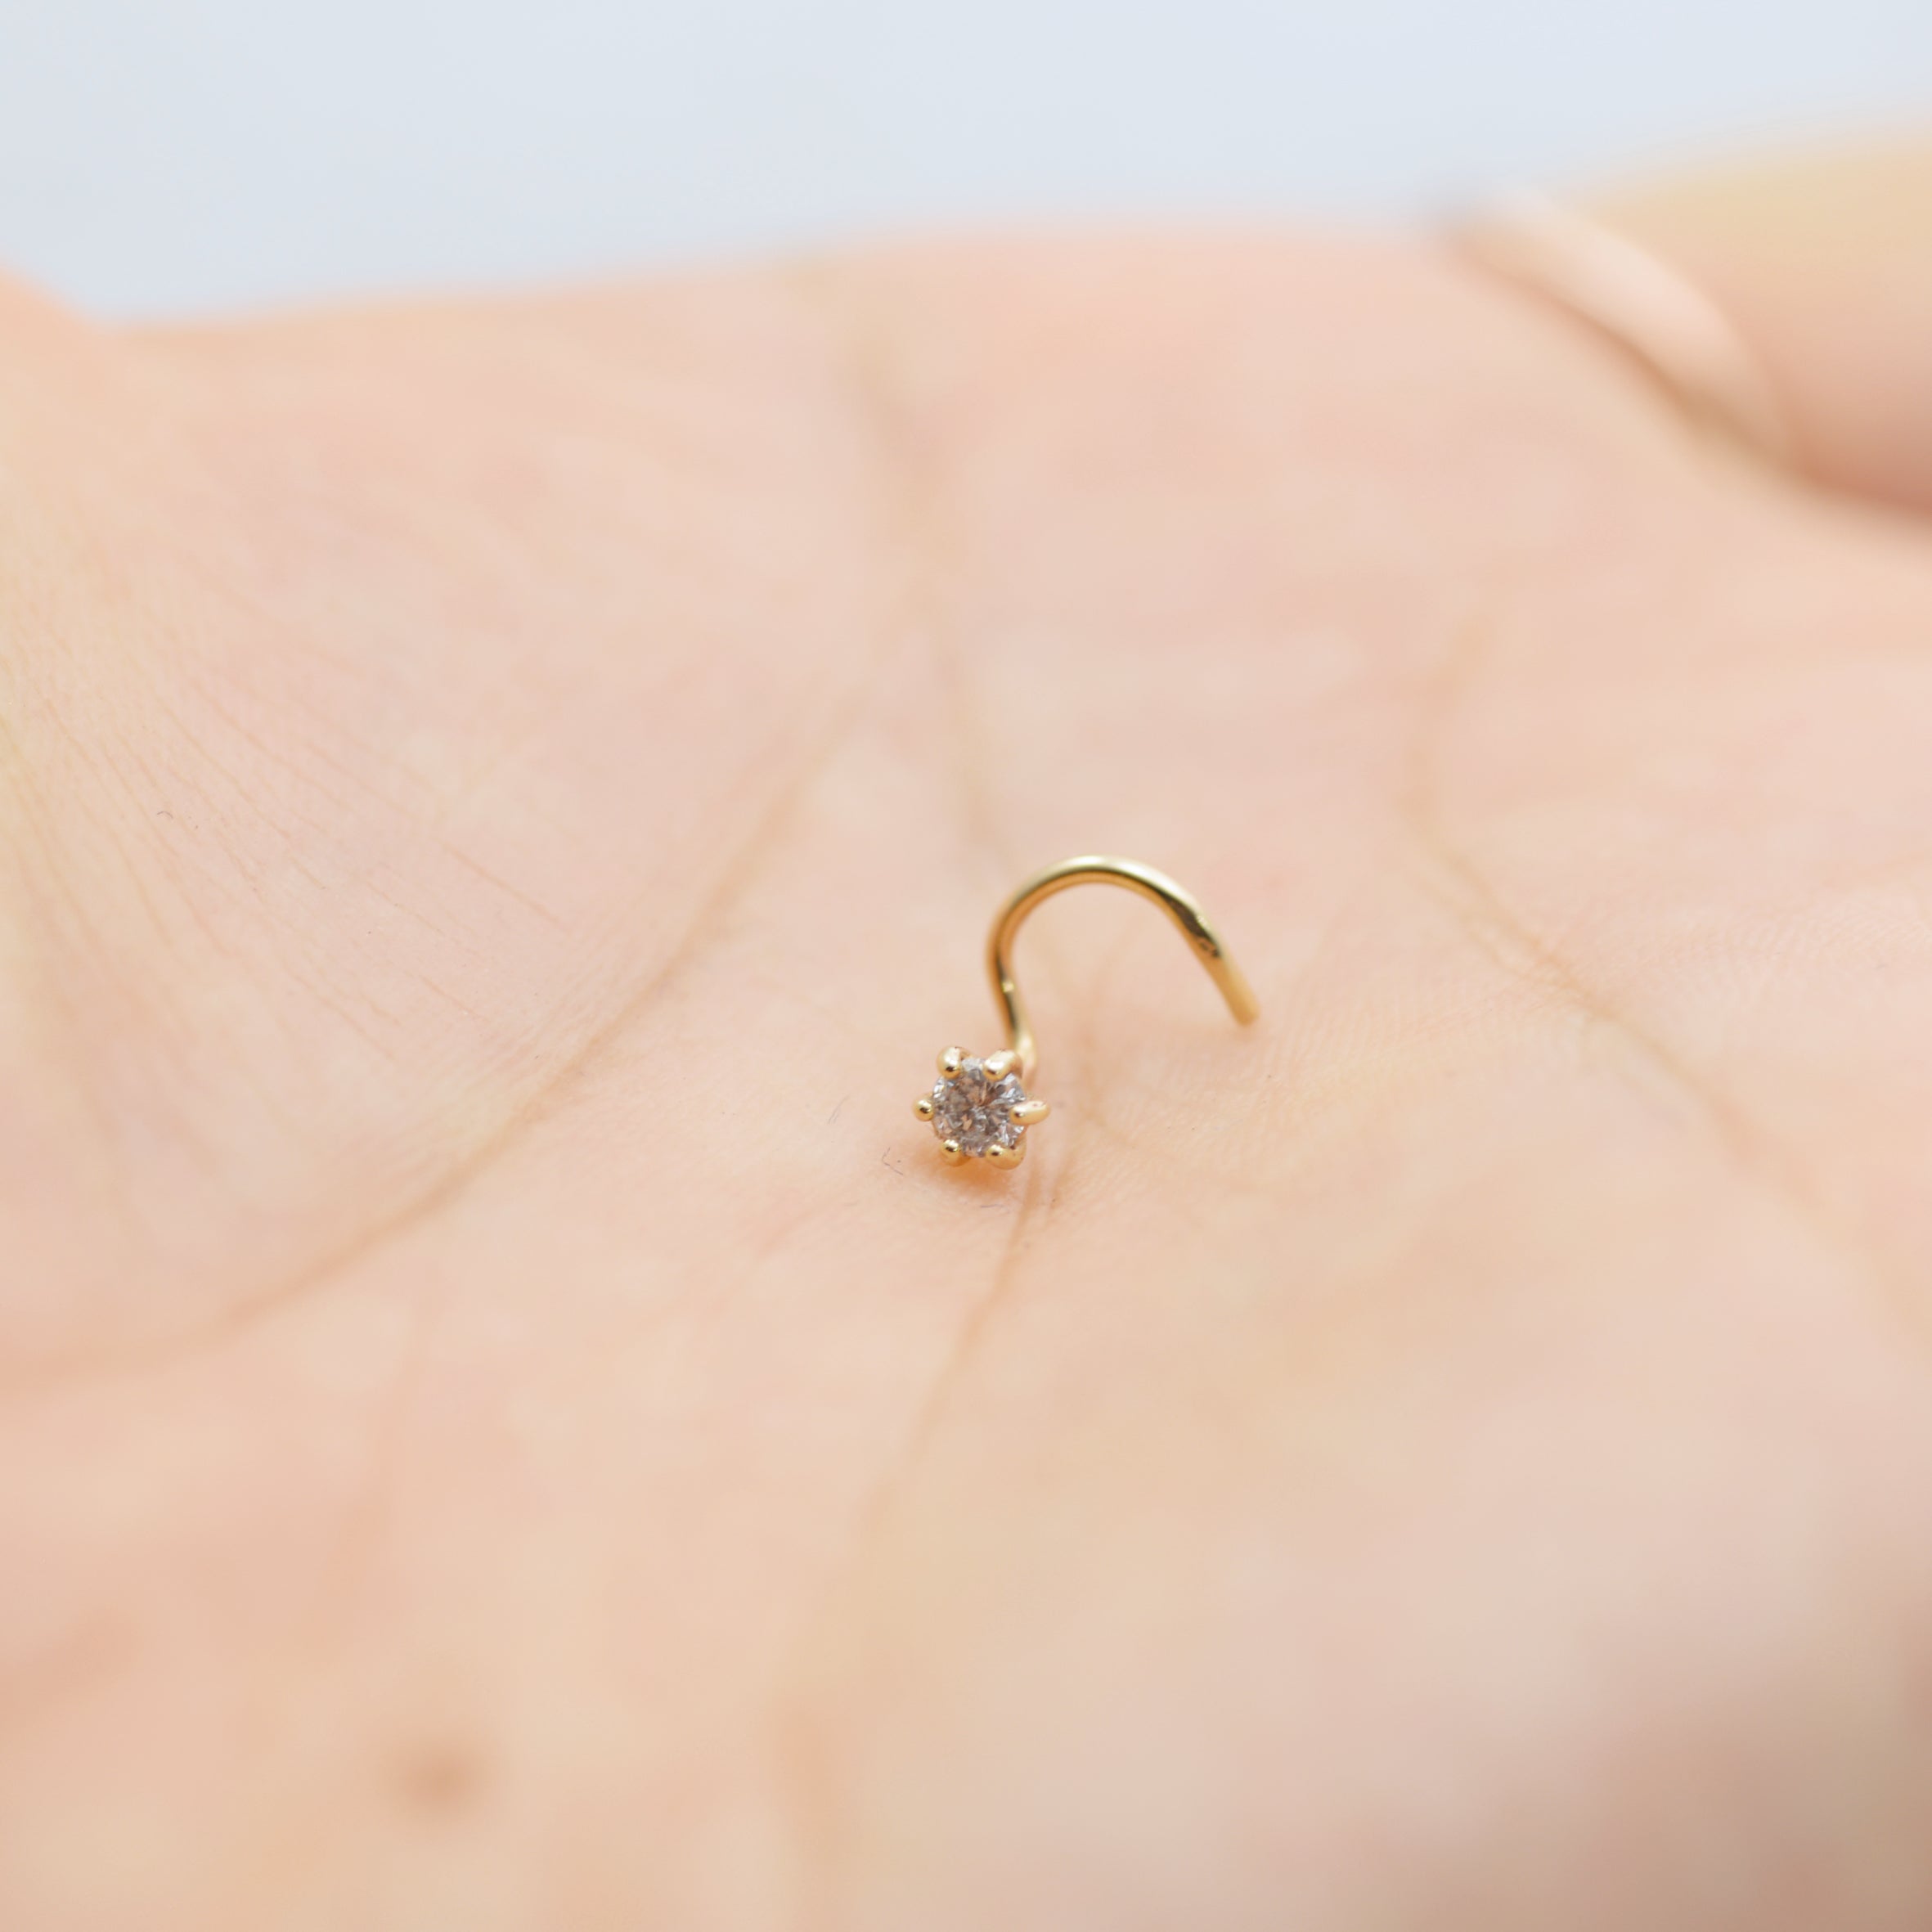 Gold Steel Curved Hinged Clicker Ring with 8 Gem 16 Gauge Body Piercing  Jewellery |Essential Beauty | Septum piercing jewelry, Nose piercing jewelry,  Earings piercings